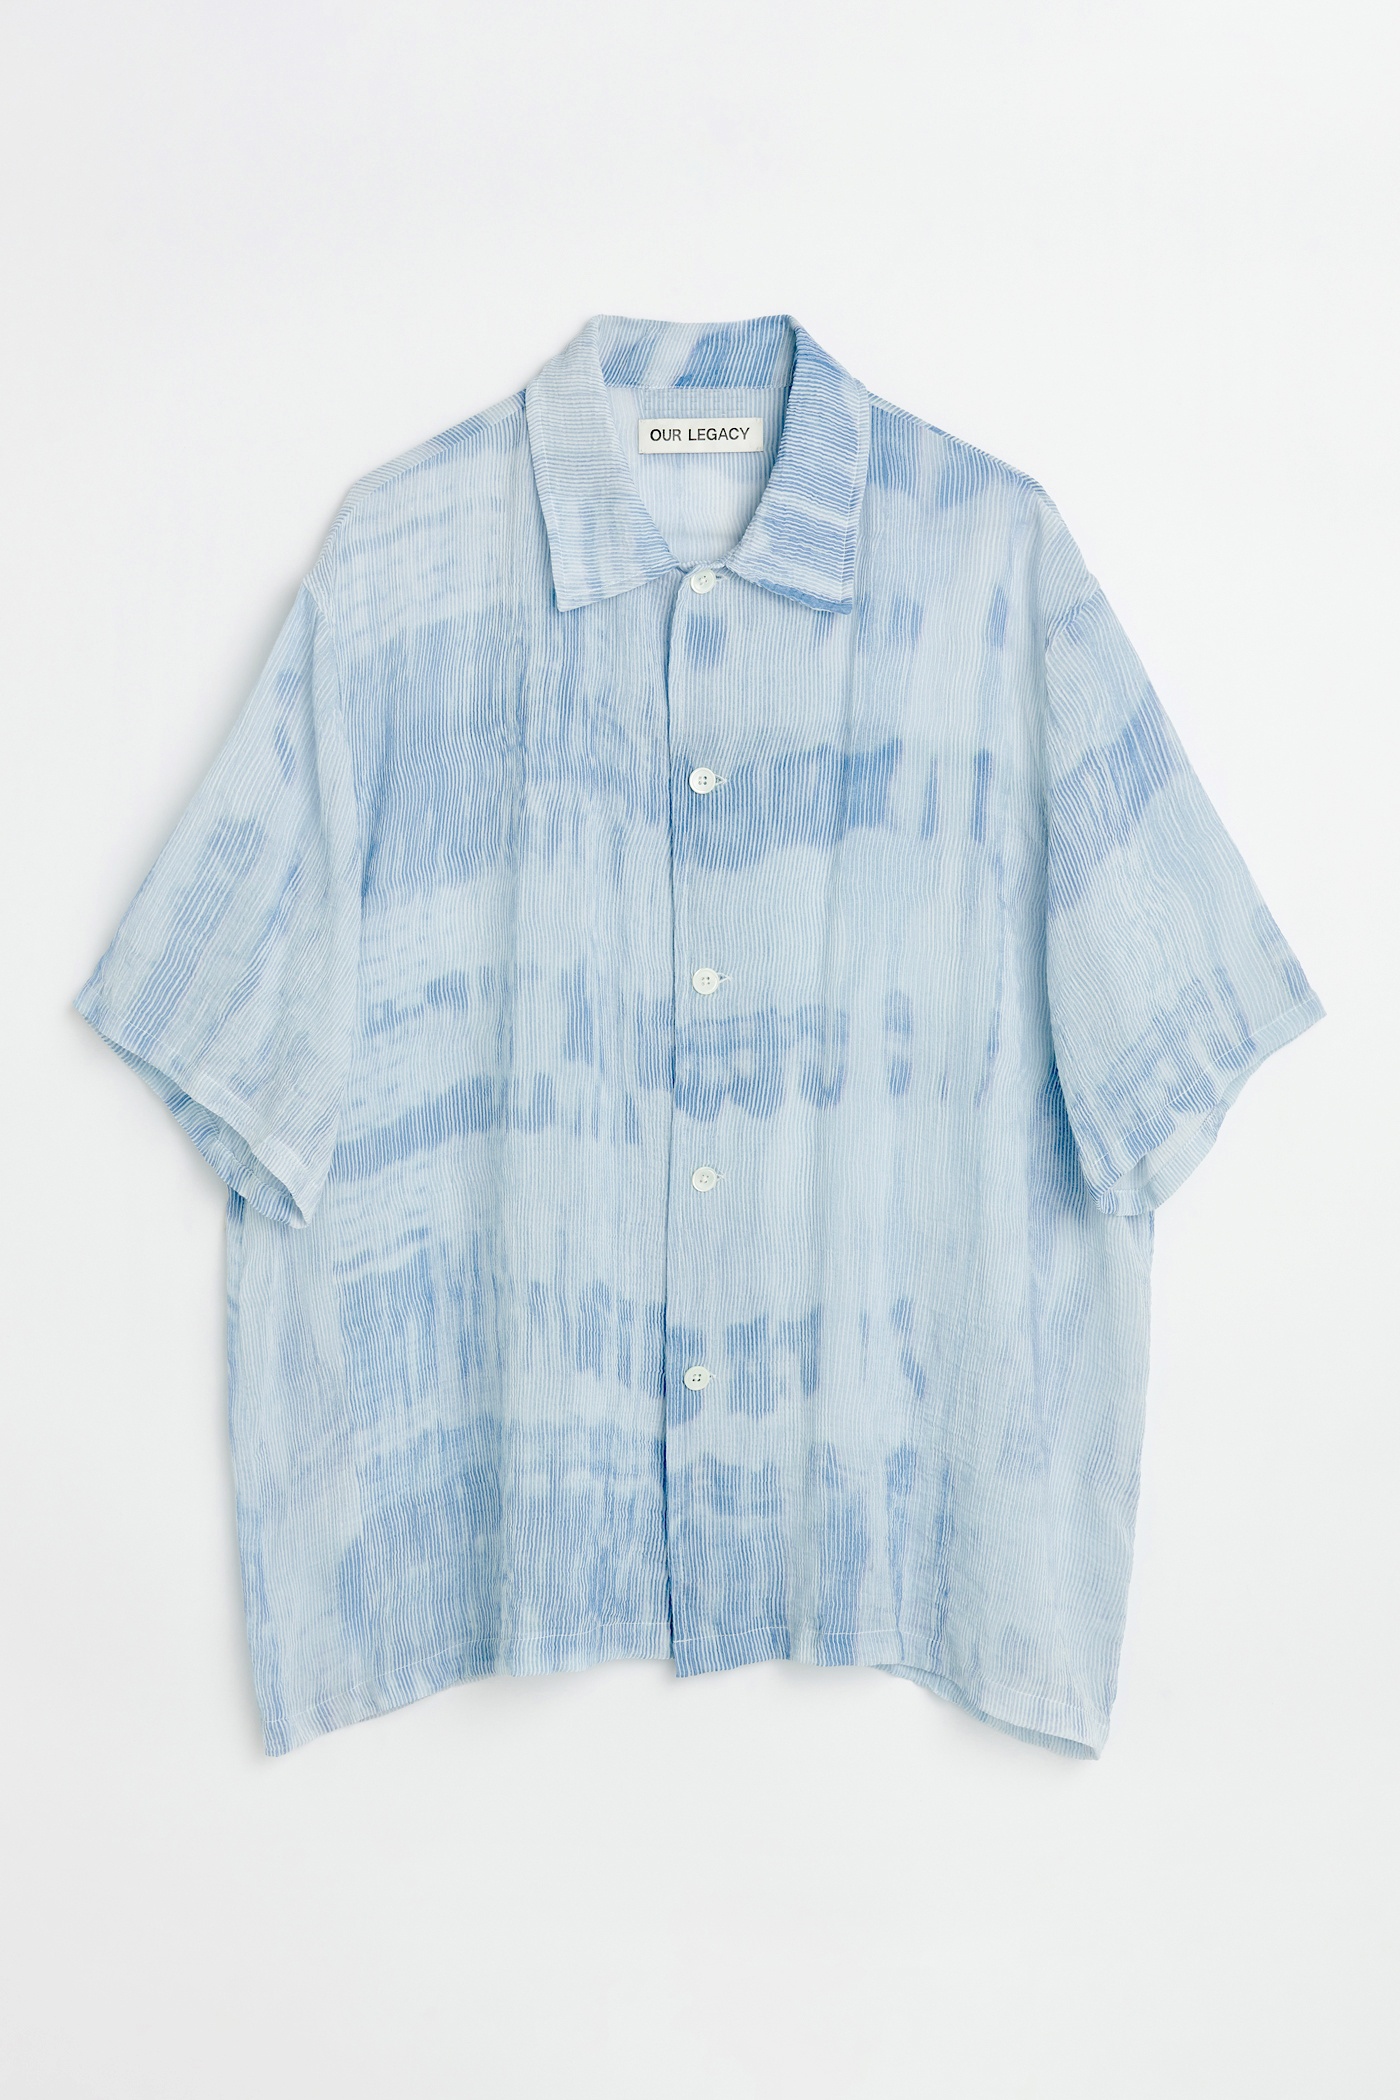 Our Legacy Box Shirt Shortsleeve Blue Brush Stroke Print | REVERSIBLE